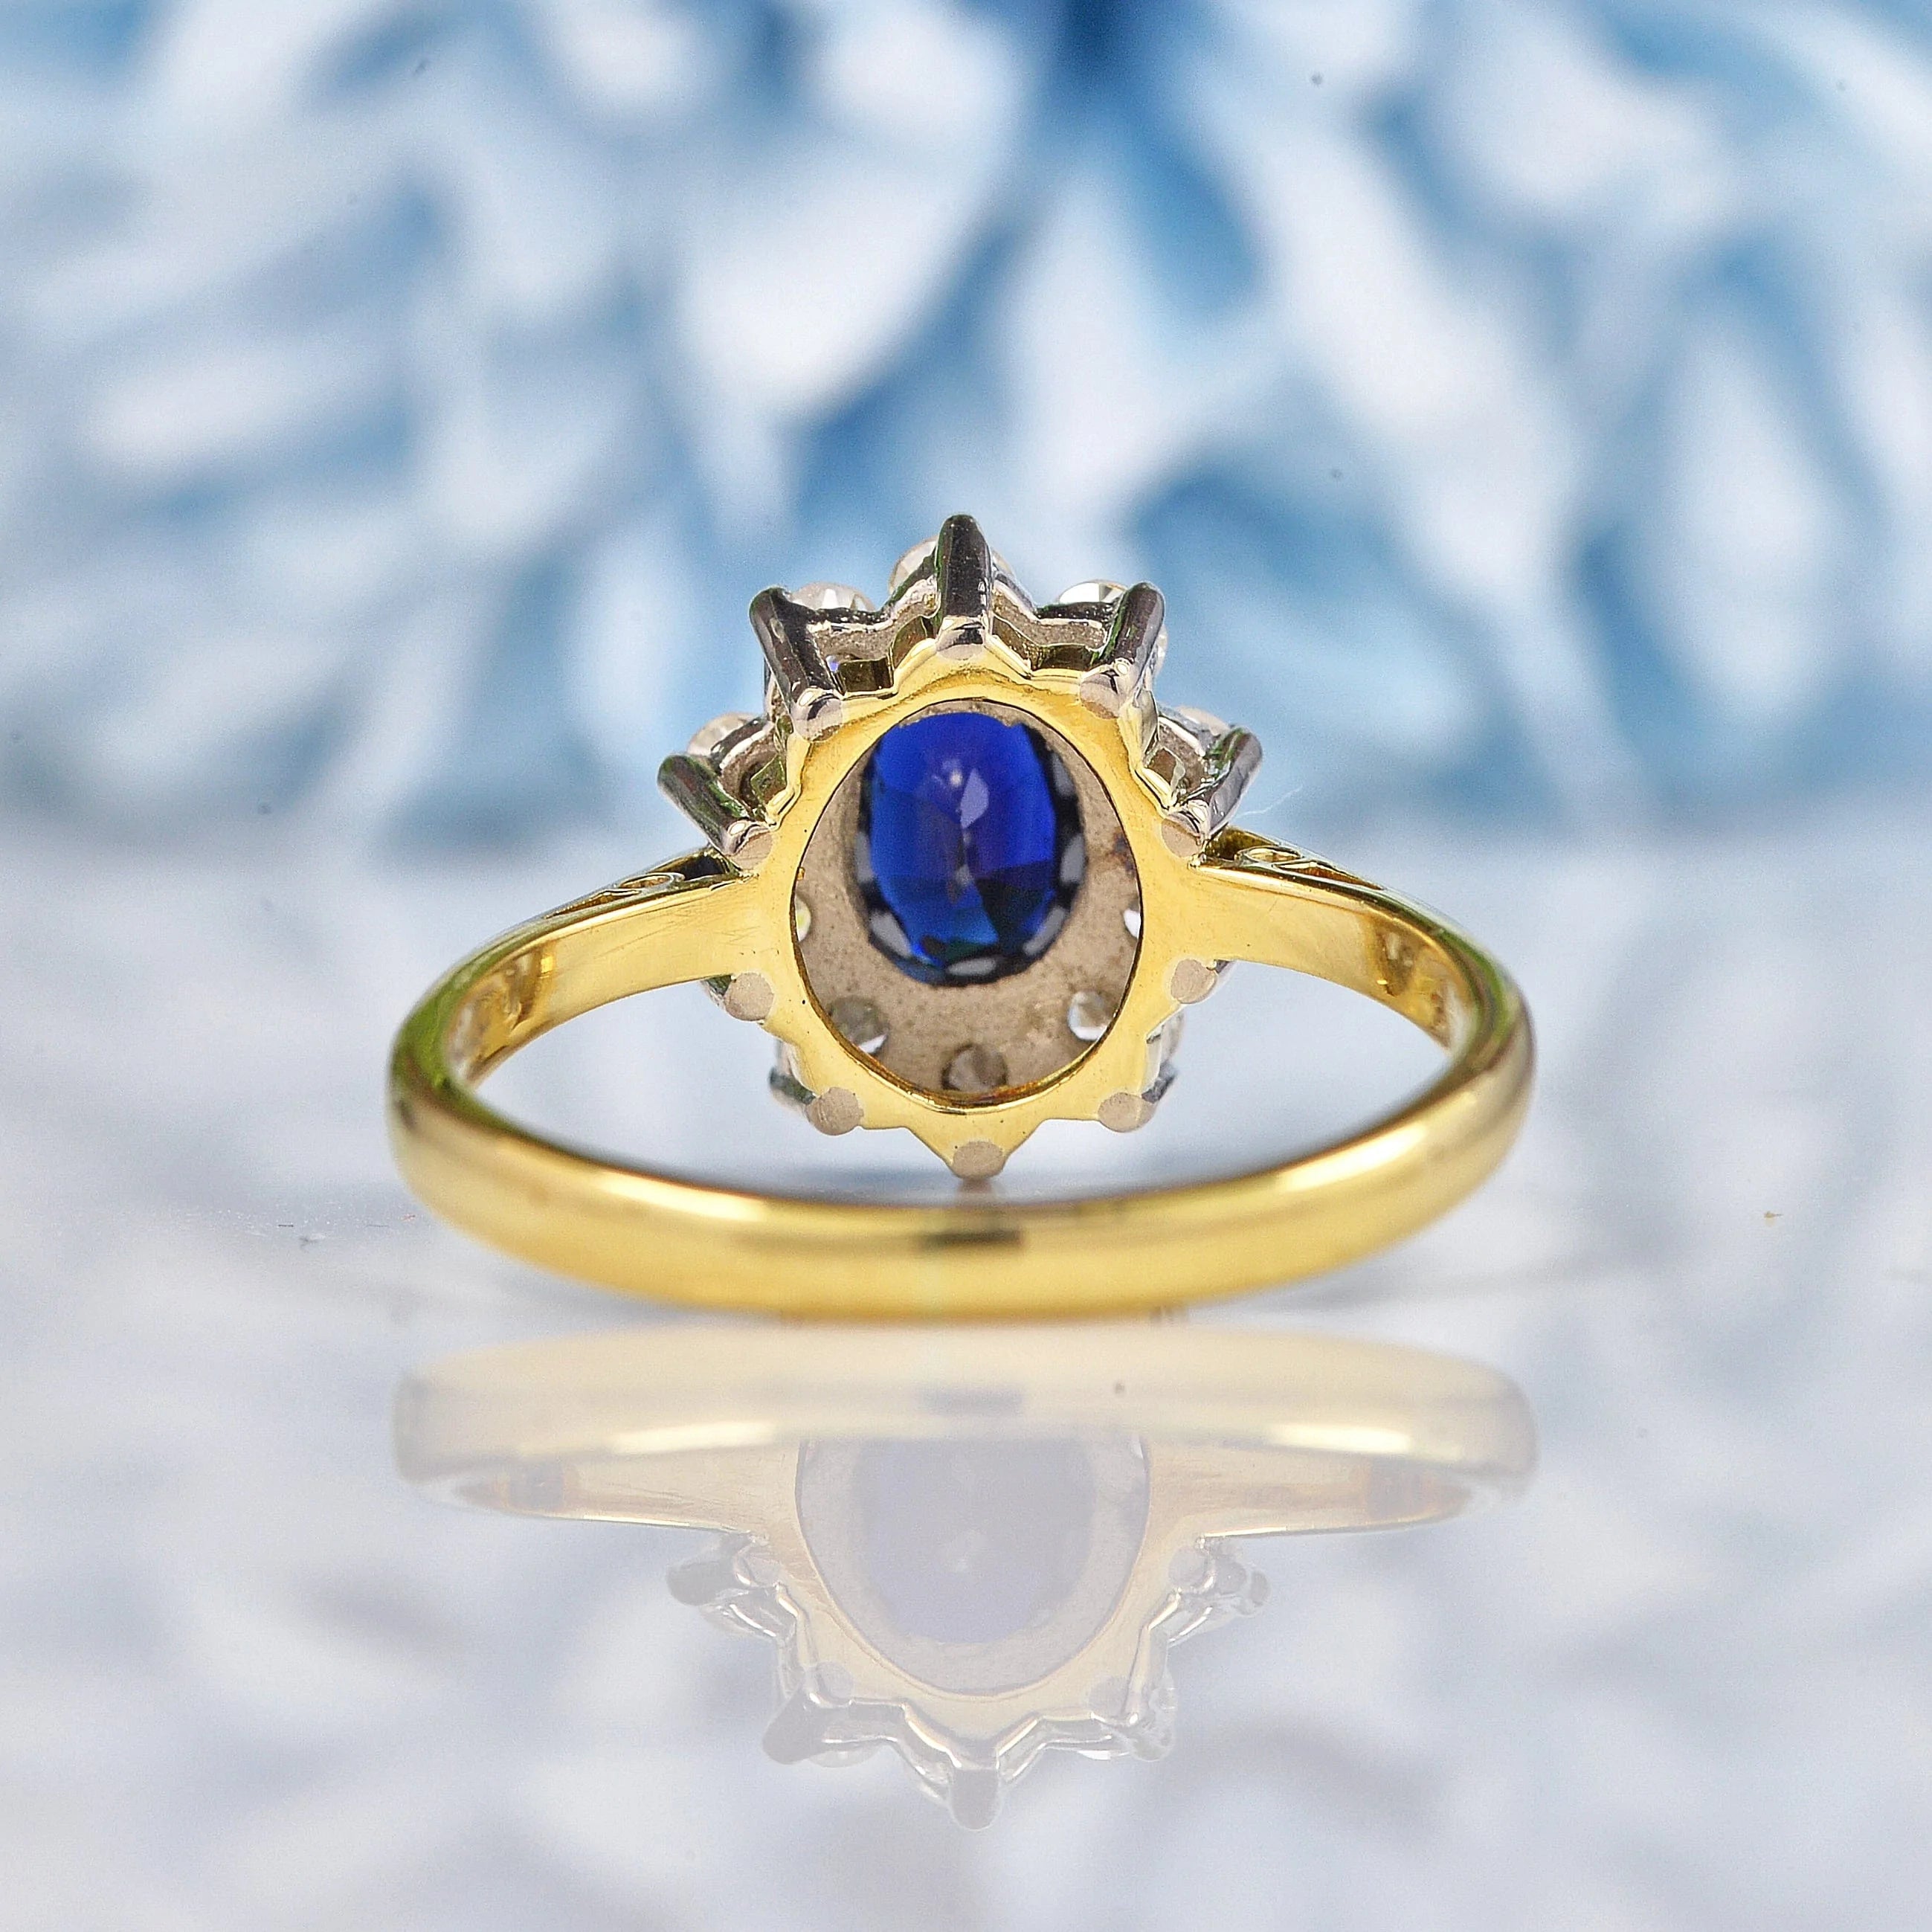 Ellibelle Jewellery Vintage Blue Sapphire & Diamond 18ct Gold Oval Cluster Ring